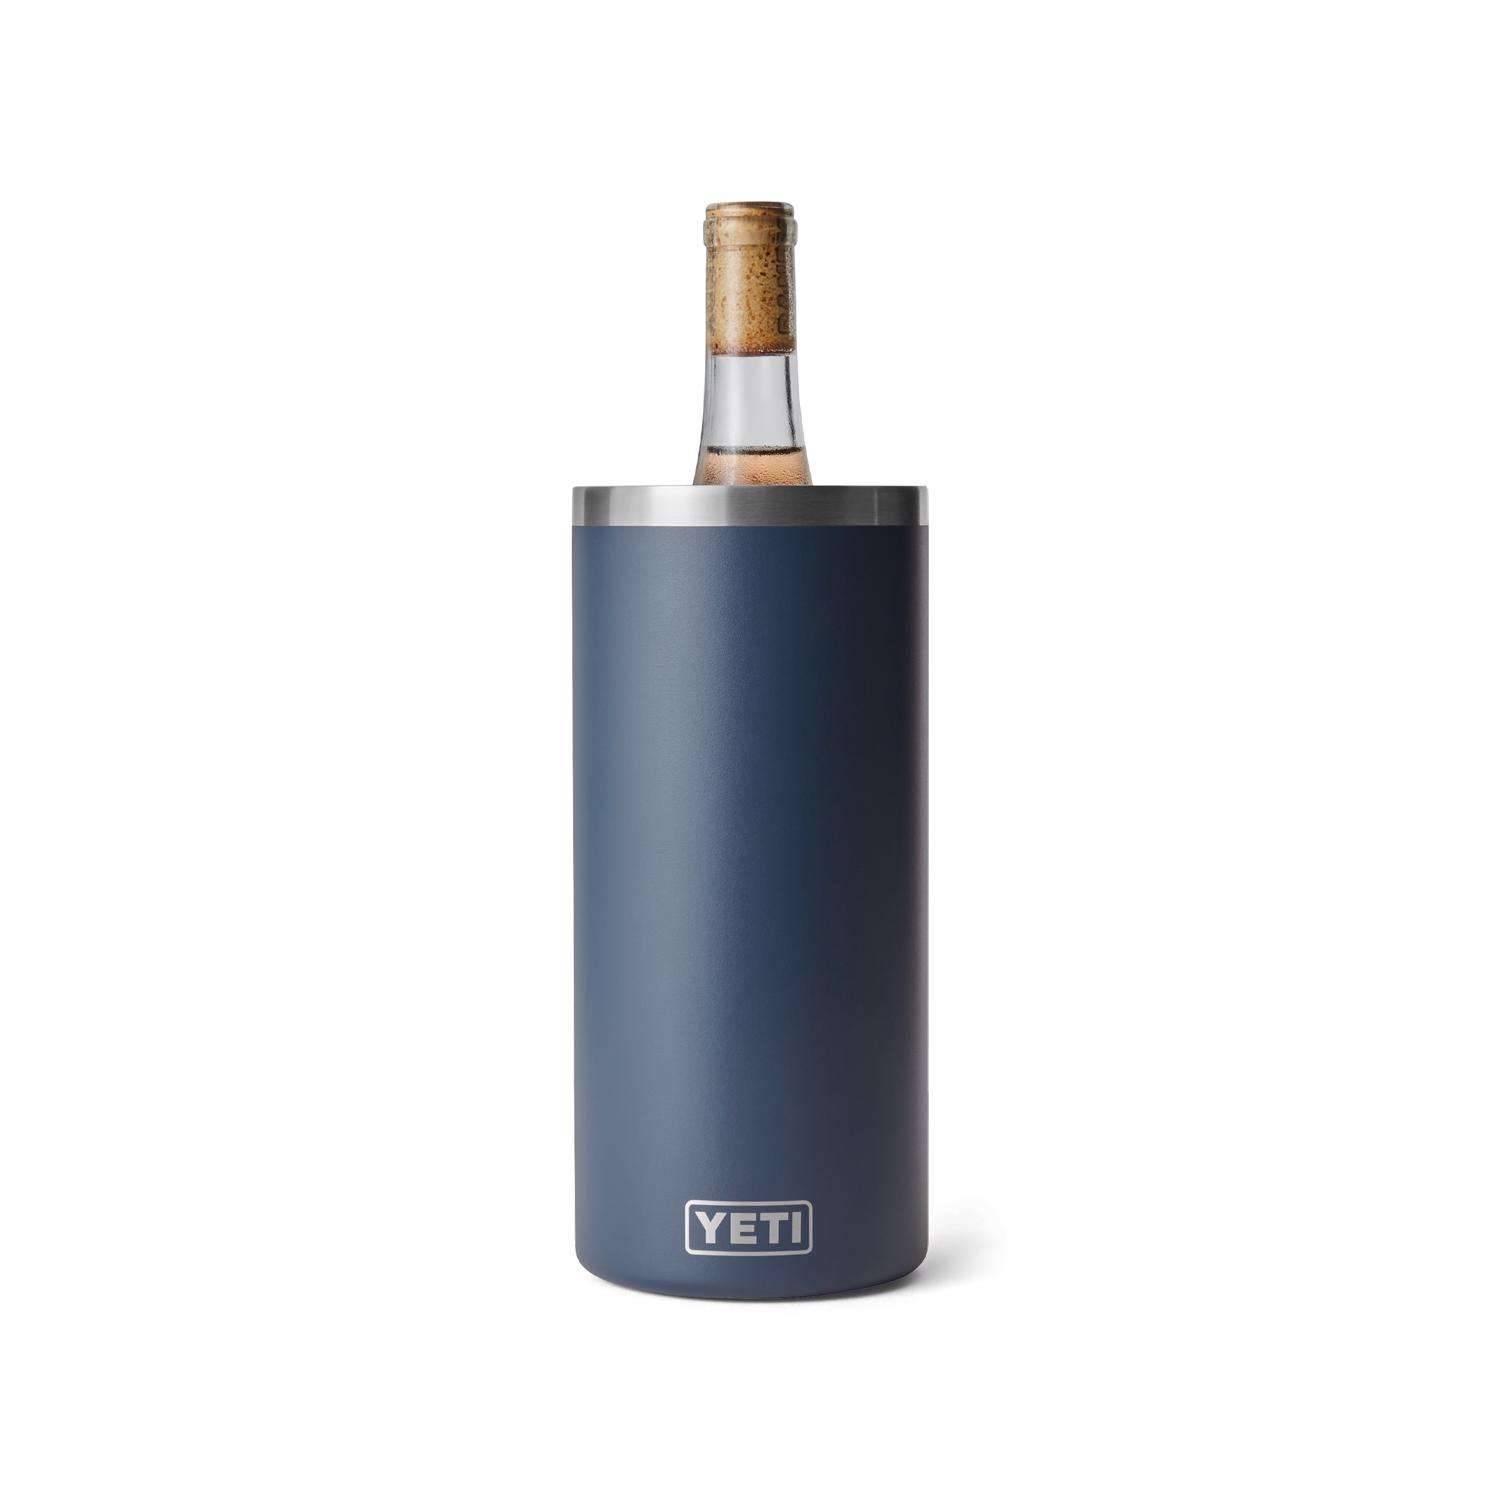  YETI Rambler Beverage Bucket, Double-Wall Vacuum Insulated Ice  Bucket with Lid, Navy: Home & Kitchen